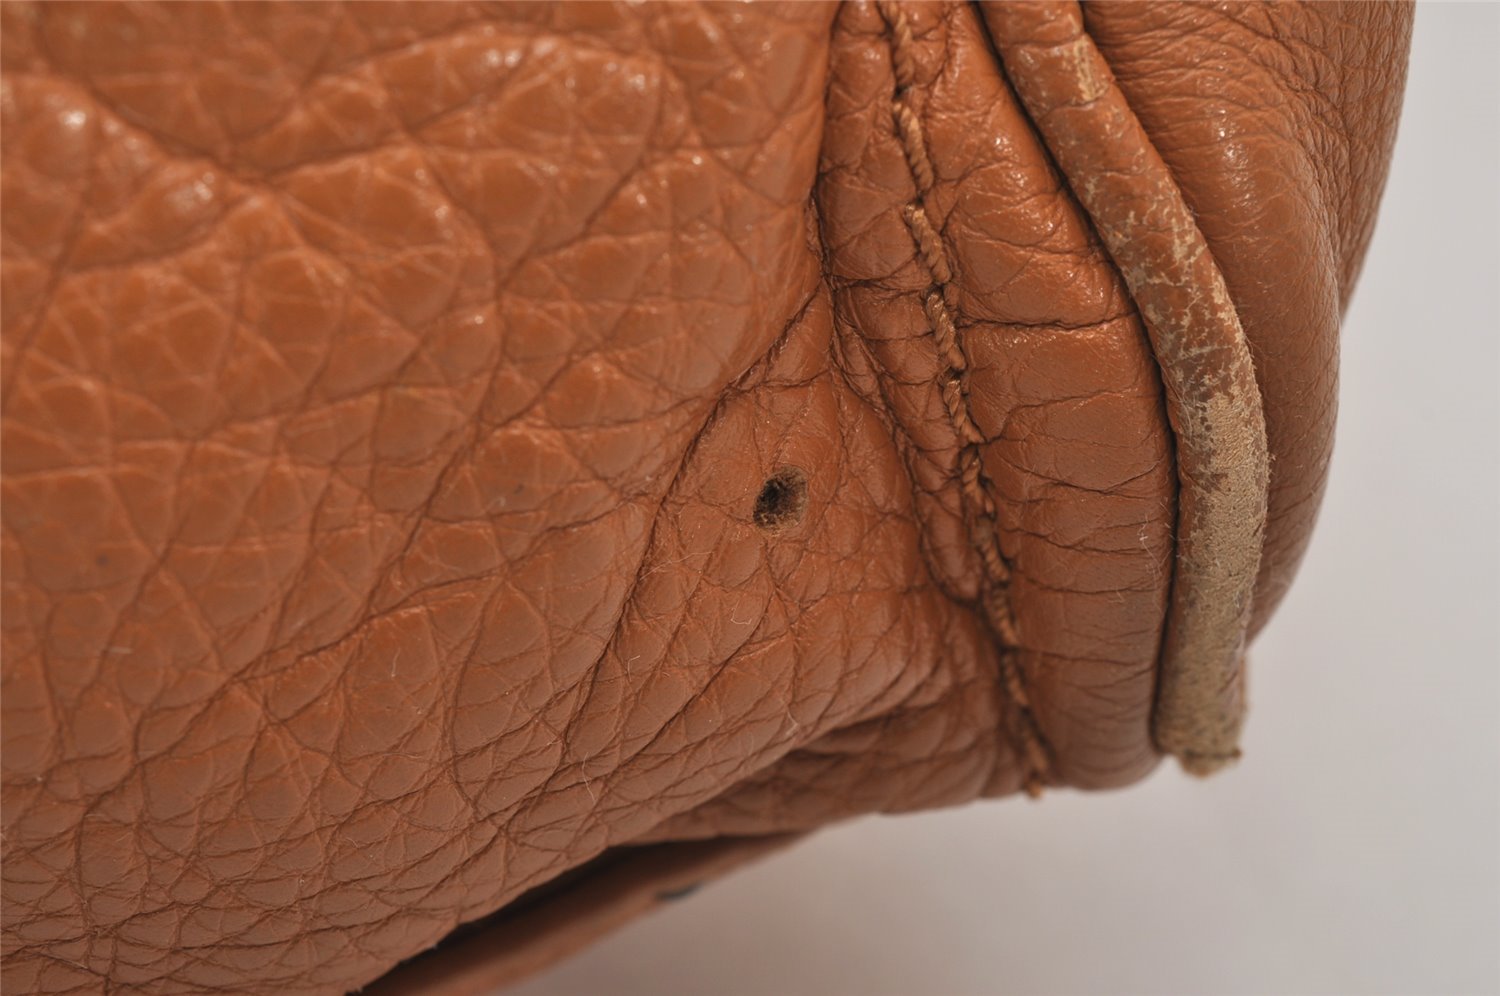 Authentic Chloe Vintage Paddington Leather Shoulder Hand Bag Brown 2676J